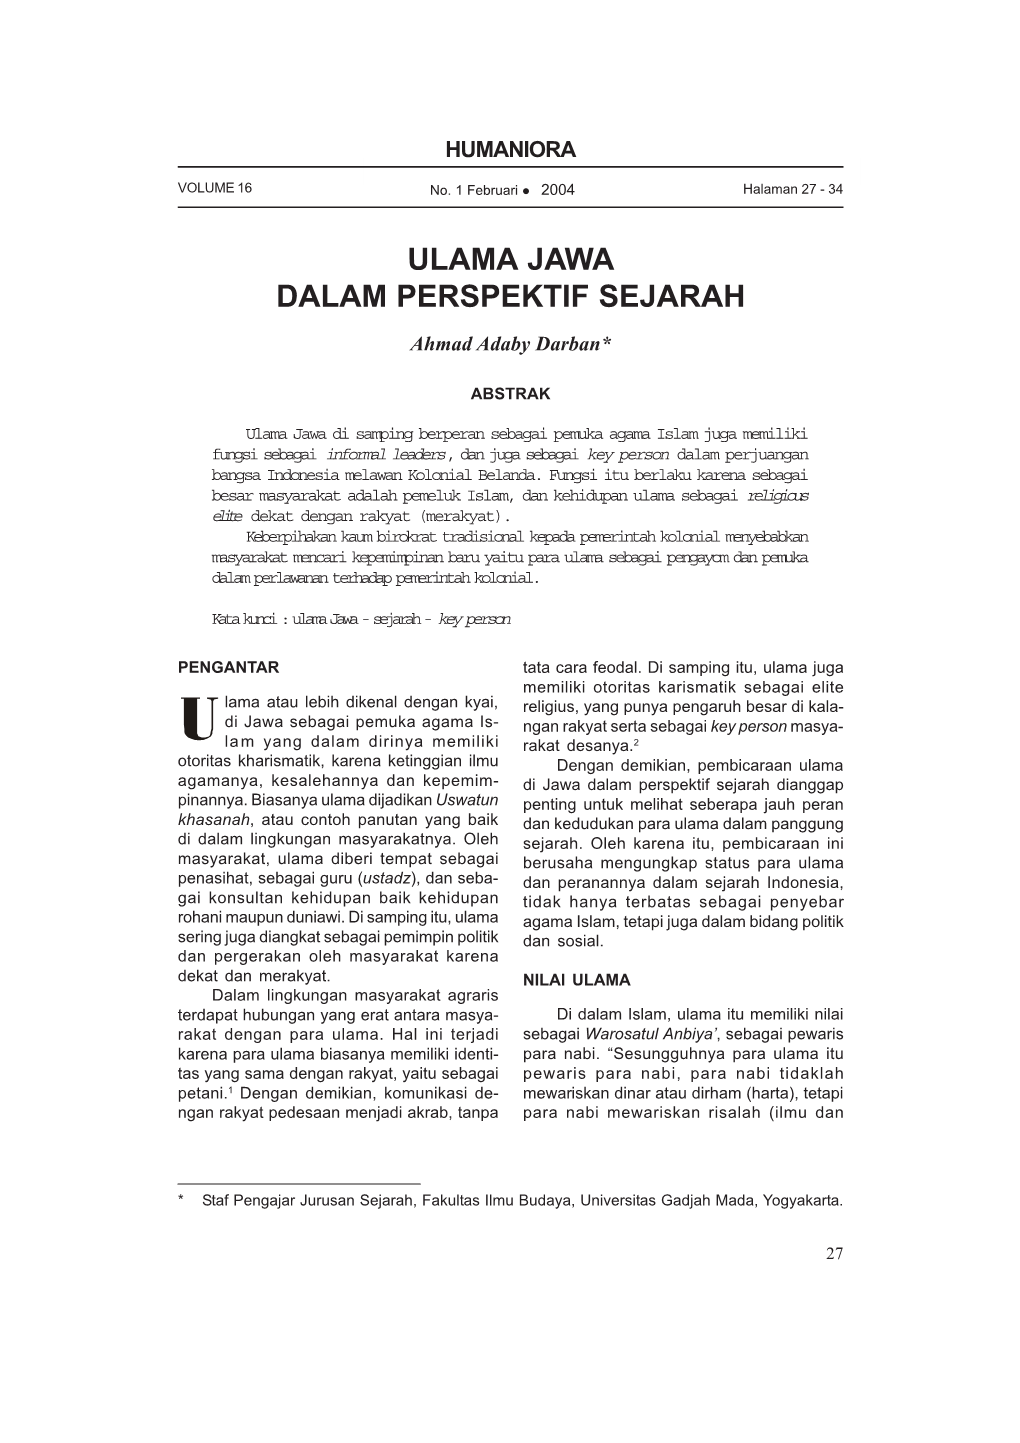 Ulama Jawa Dalam Perspektif Sejarah VOLUME 16 No